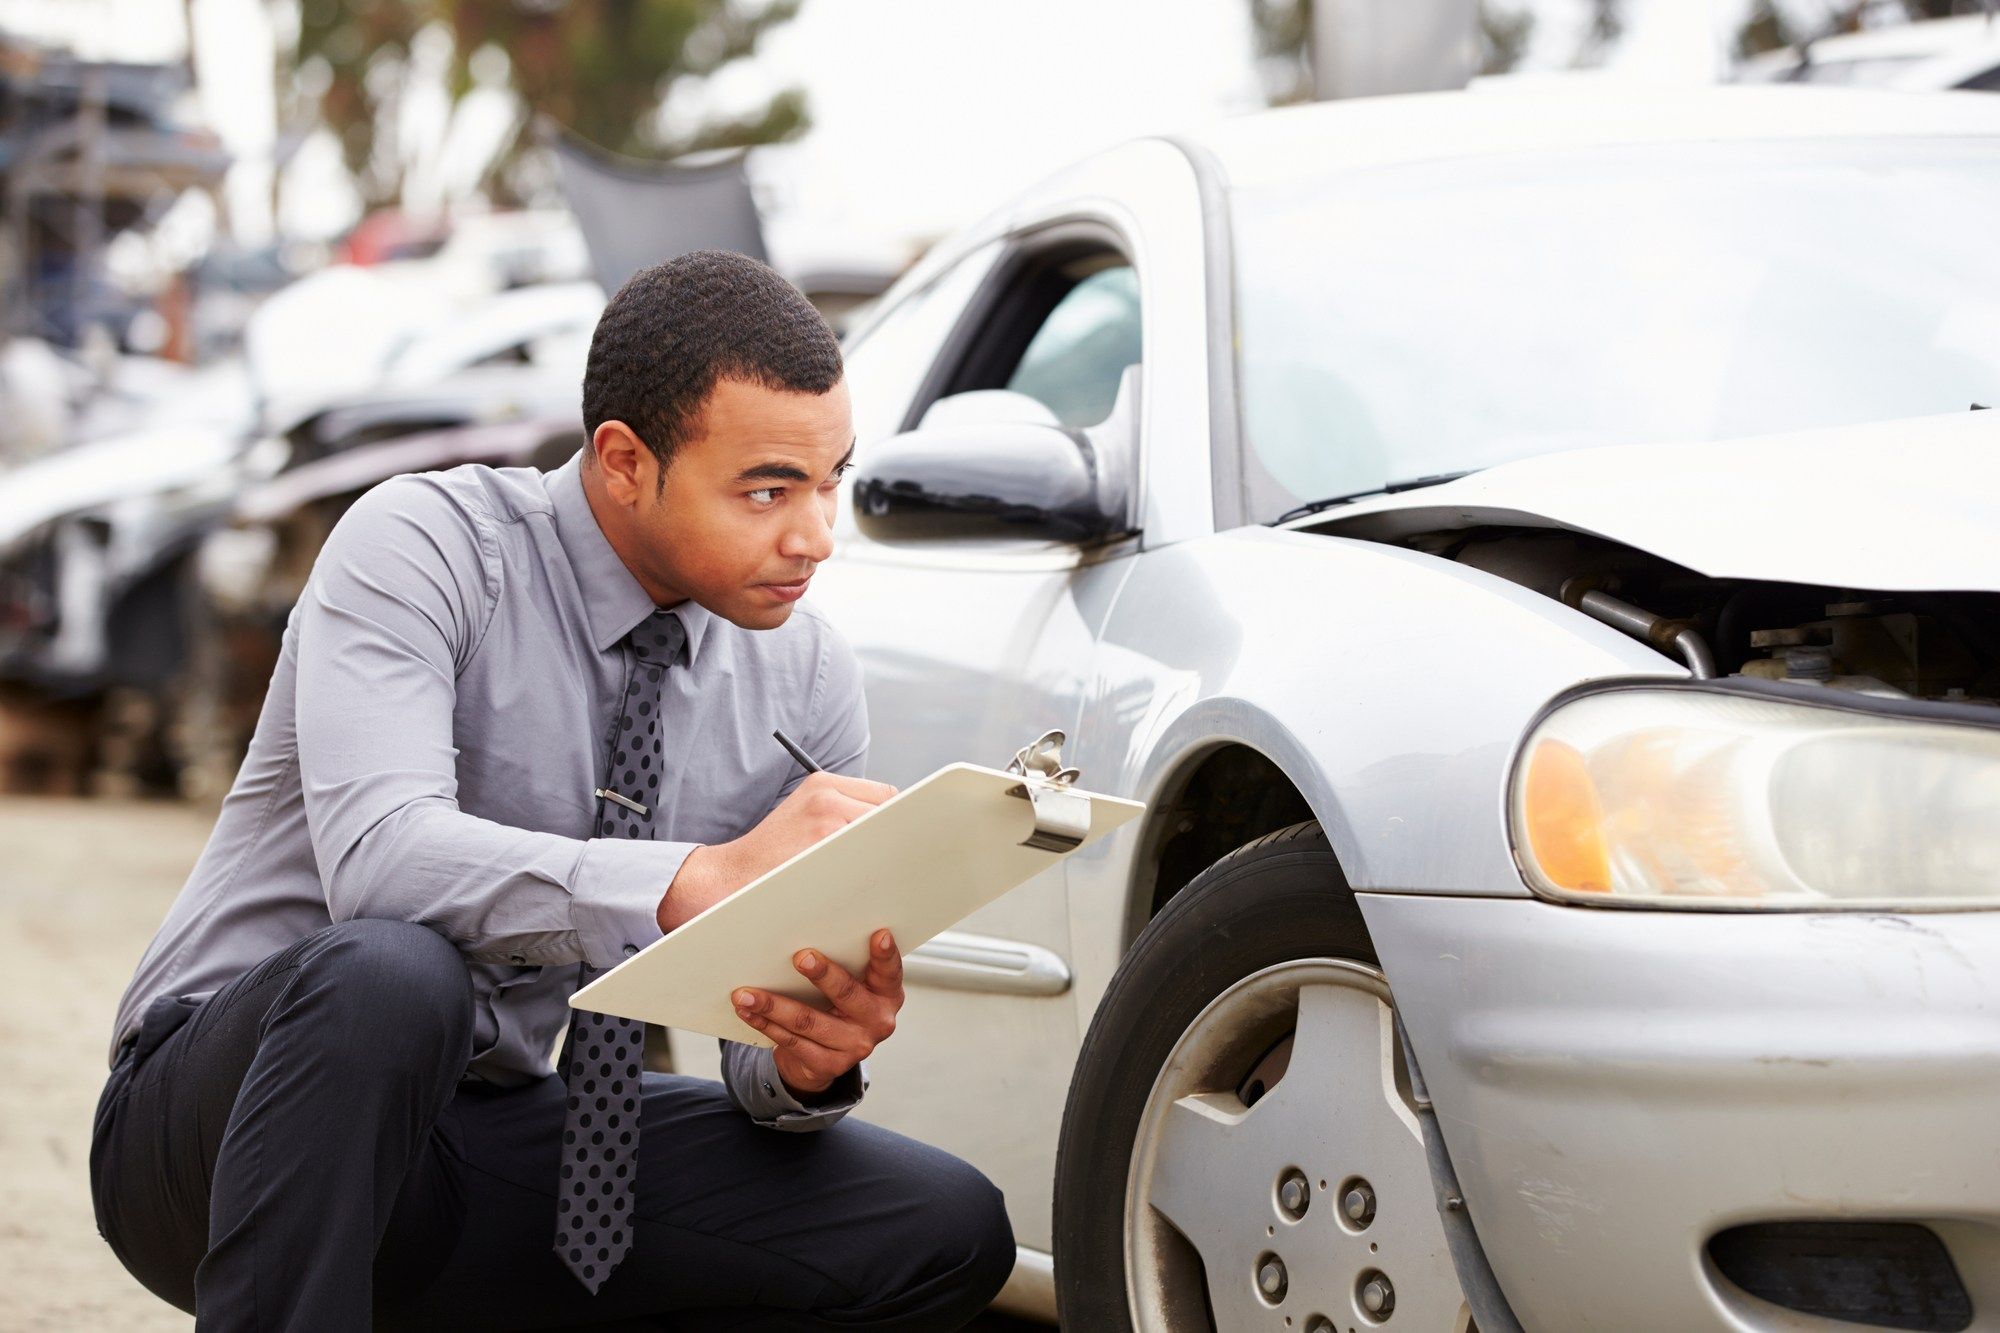 Insurance adjuster inspects damaged vehicle